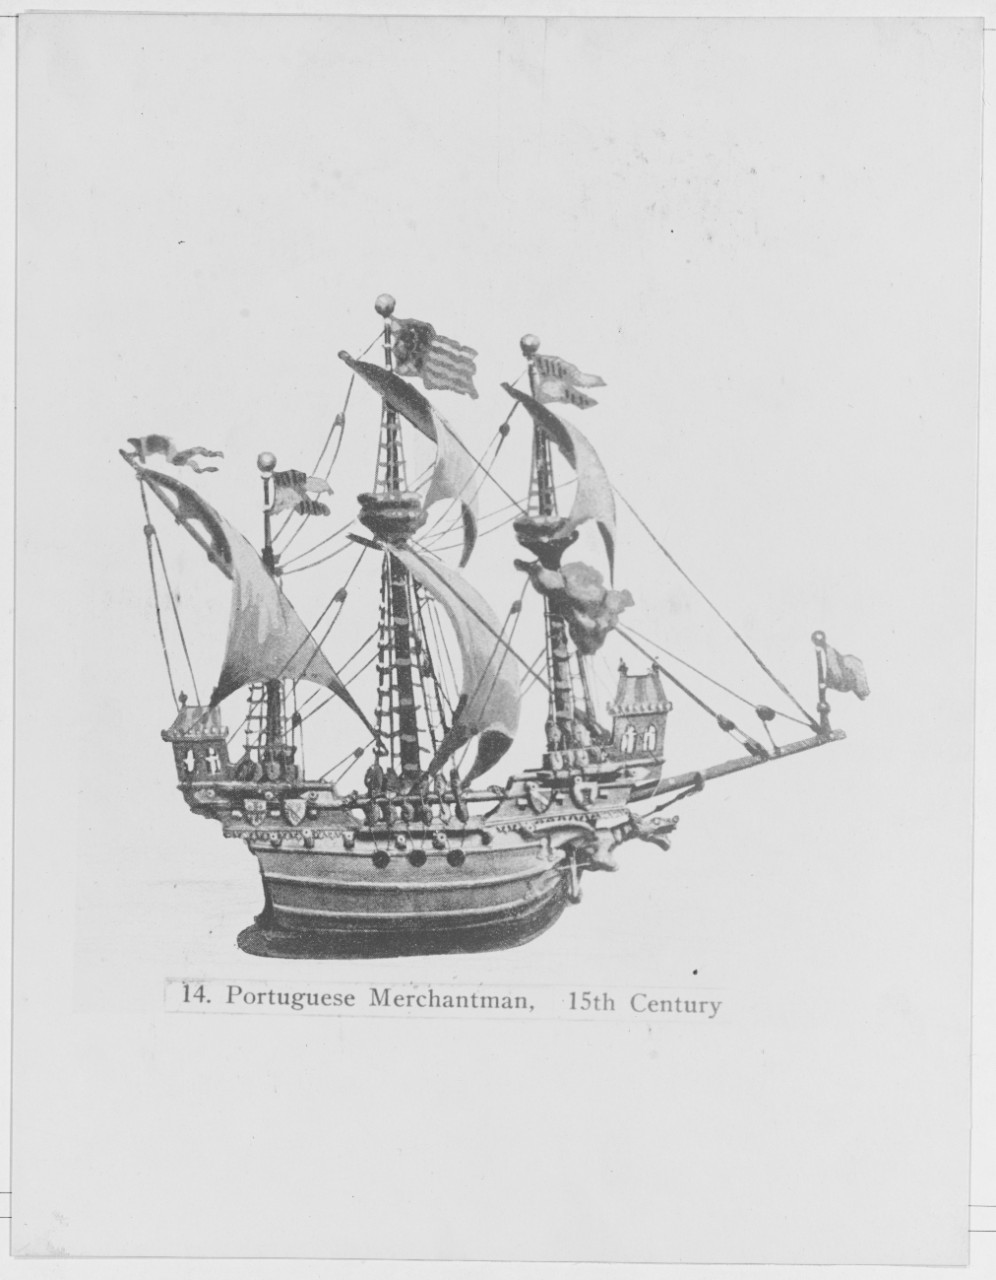 Model of Portuguese Merchantman Ship, 15th Century